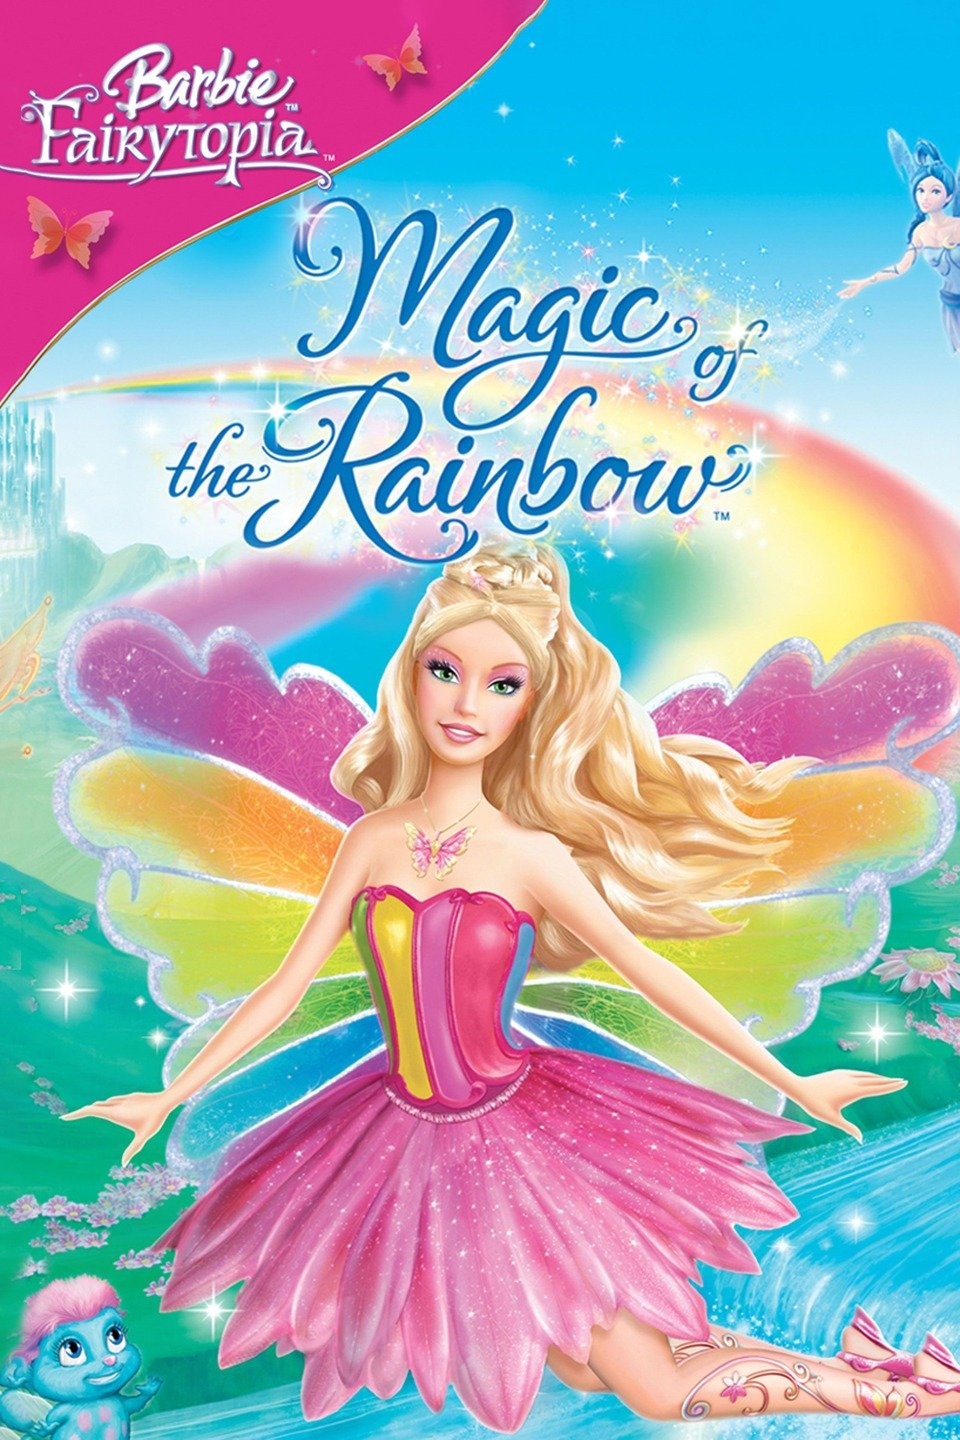 Barbie Fairytopia: Magic of the Rainbow | Rotten Tomatoes